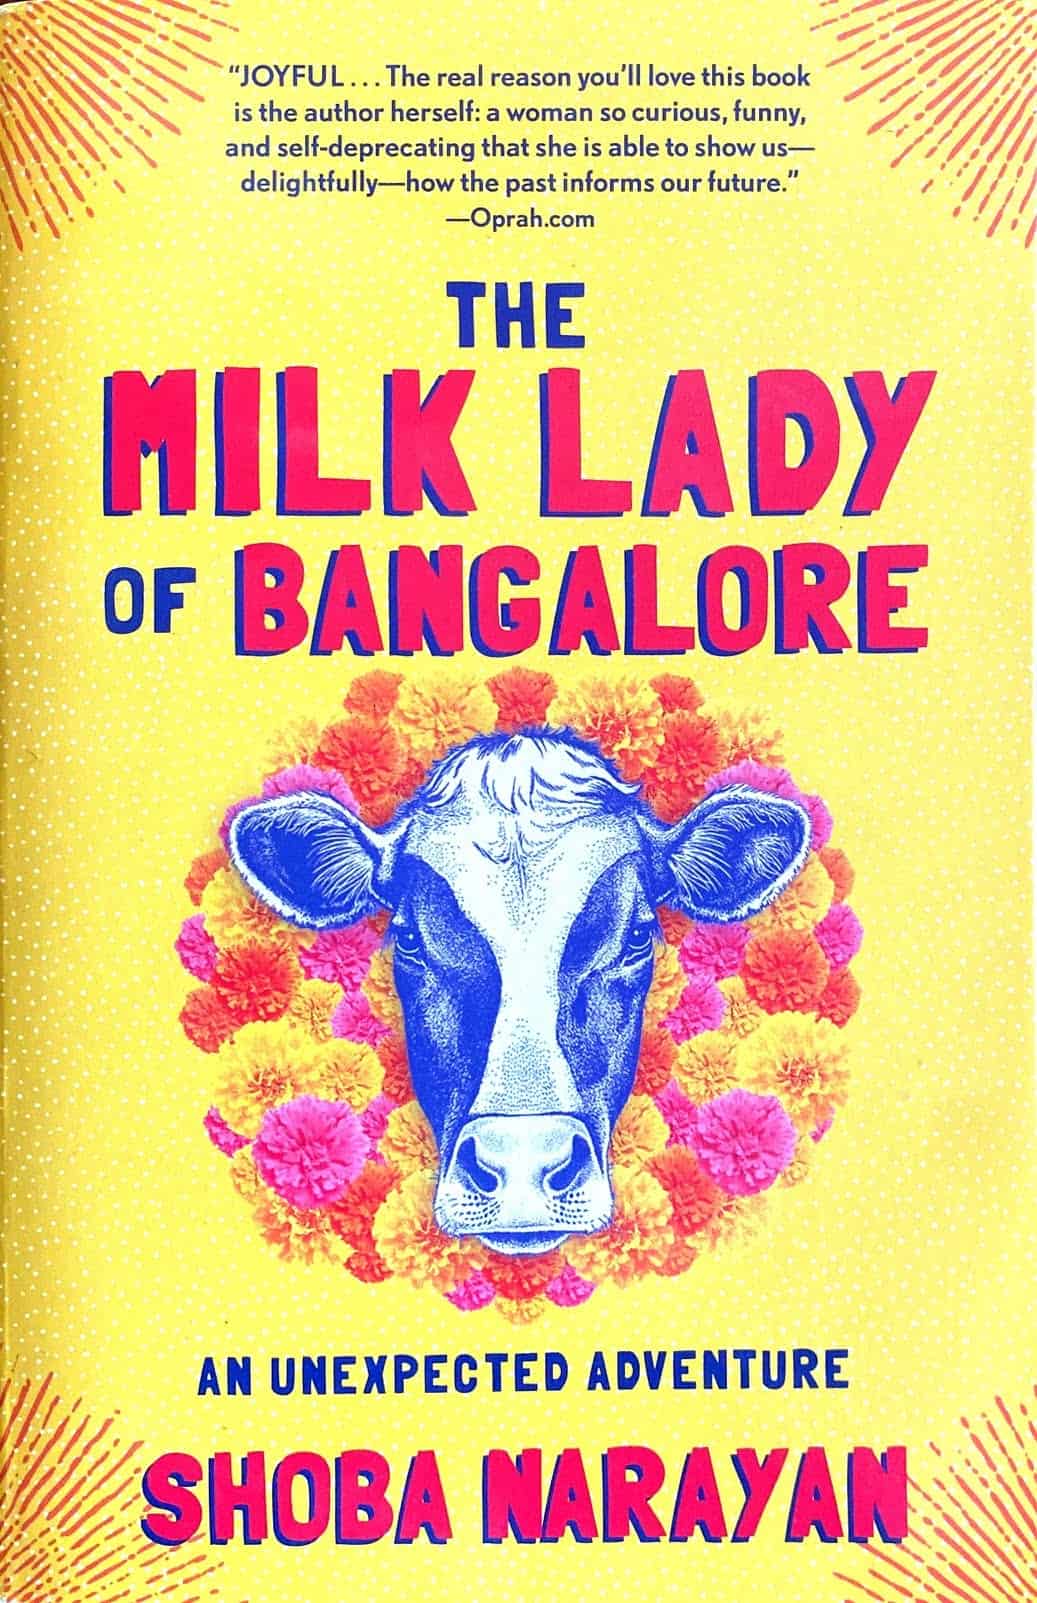 Paperback edition of The Milk Lady of Bangalore by Shoba Narayan